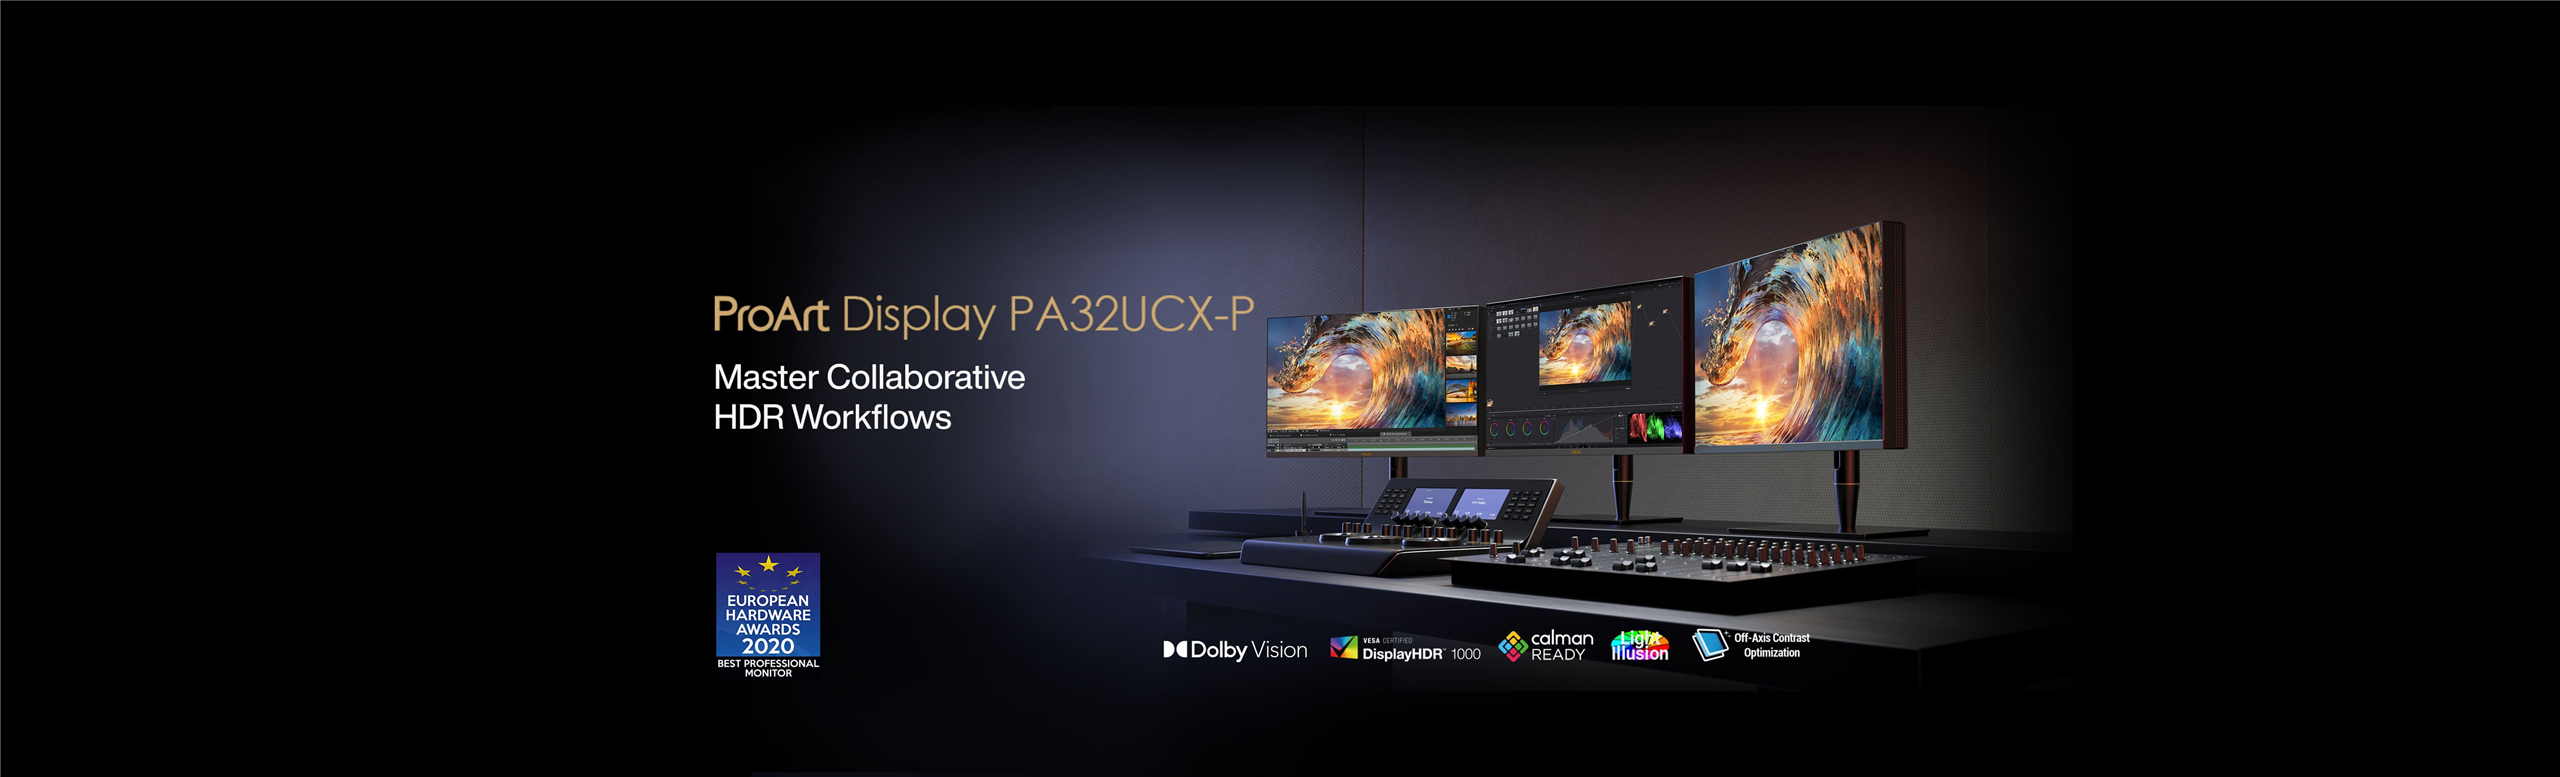 ProArt-Display-PA32UCX-P